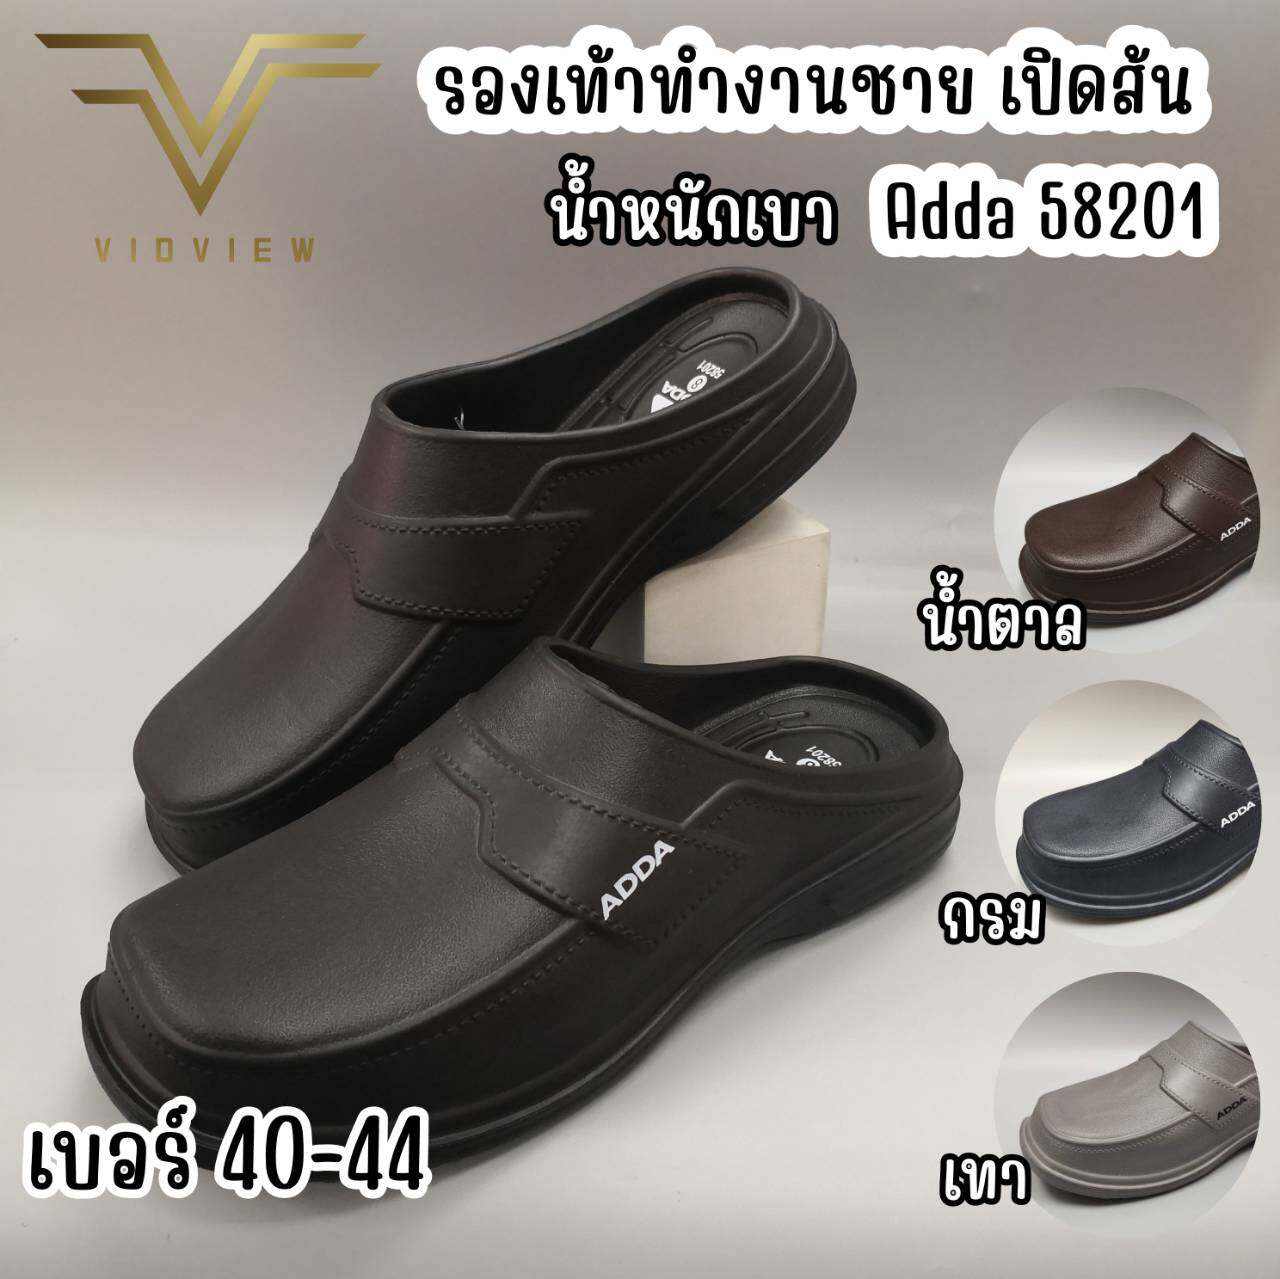 VKEKIEO Toe Ring Business Casual Shoes Men Flat Heel Platform Black -  Walmart.com